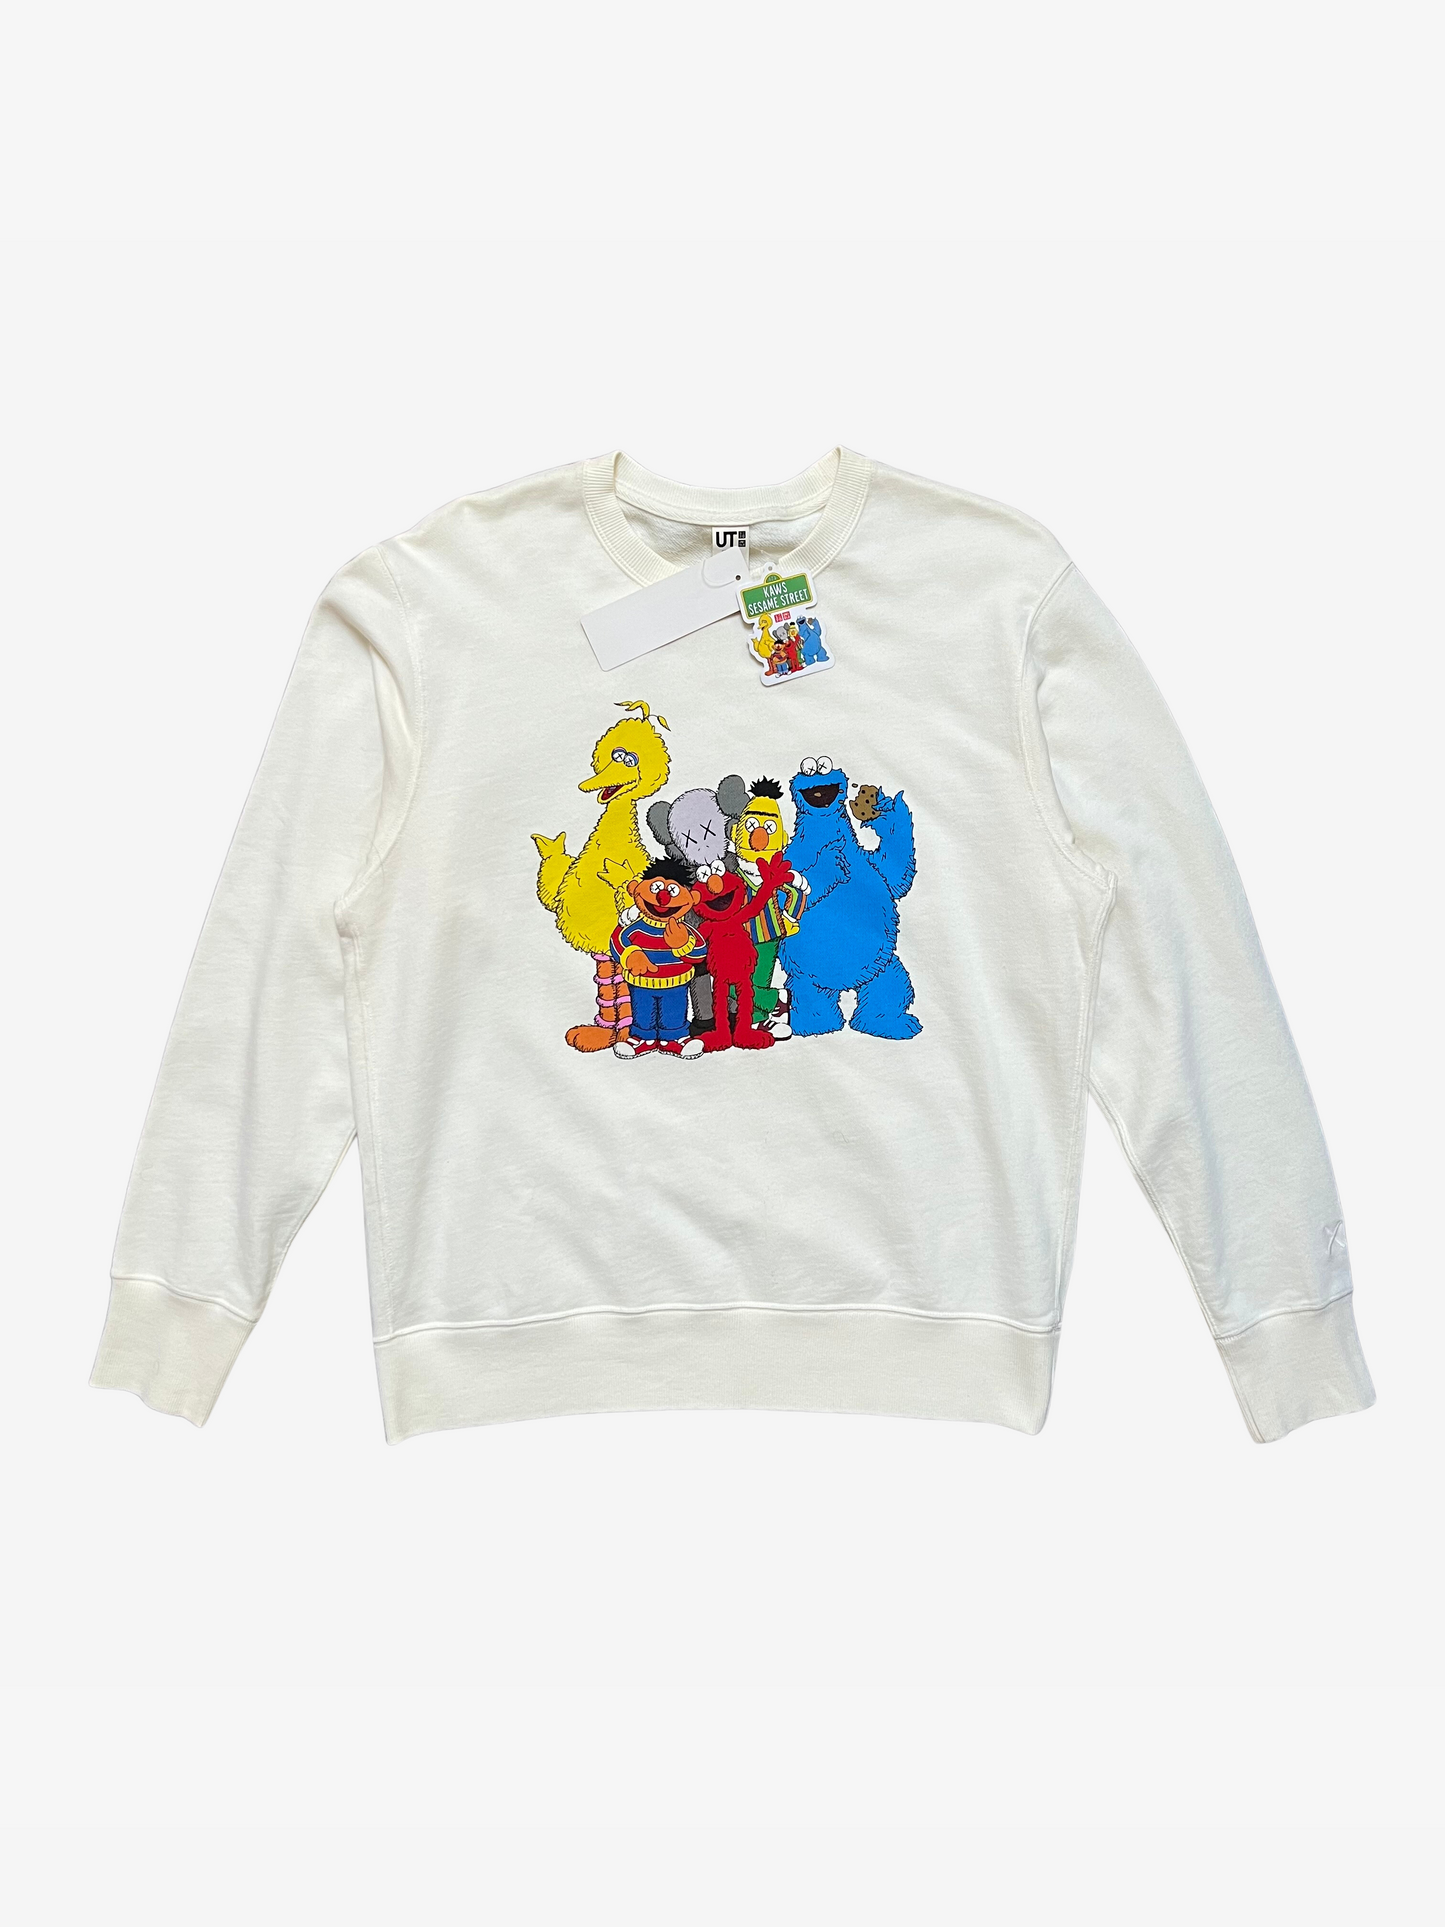 x Uniqlo x Sesame Street Cream Group #2 Sweatshirt